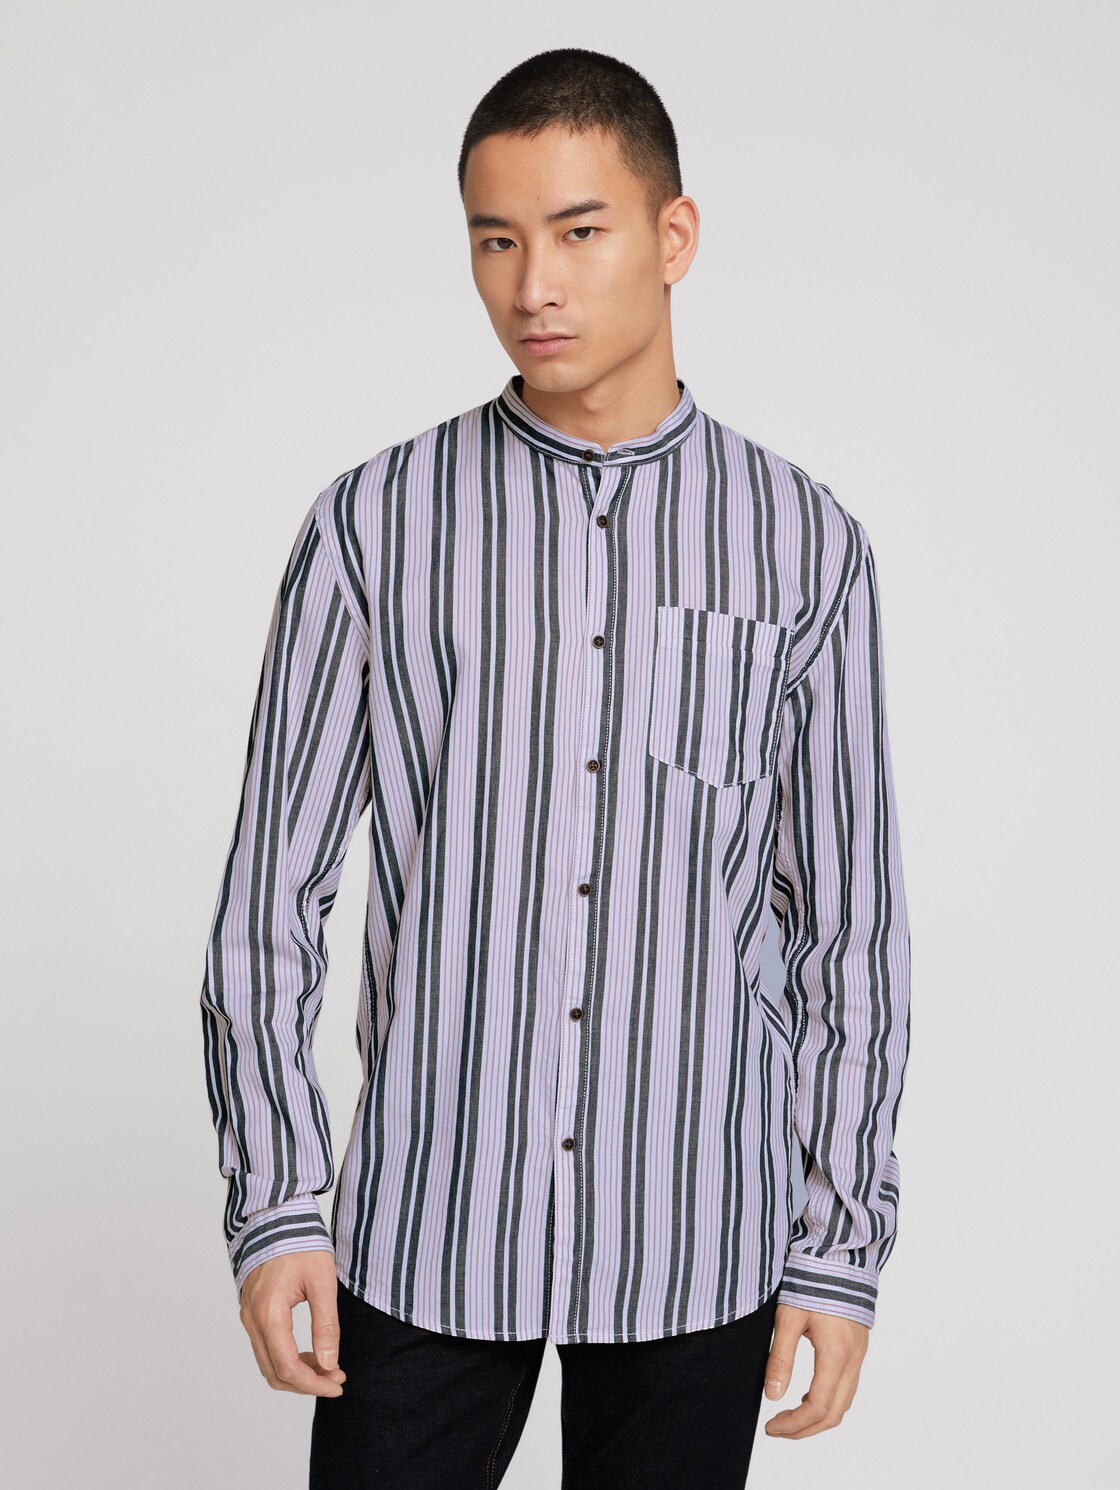 TOM TAILOR DENIM overhemd met patroon en opstaande kraag, navy berry big stripe, XL